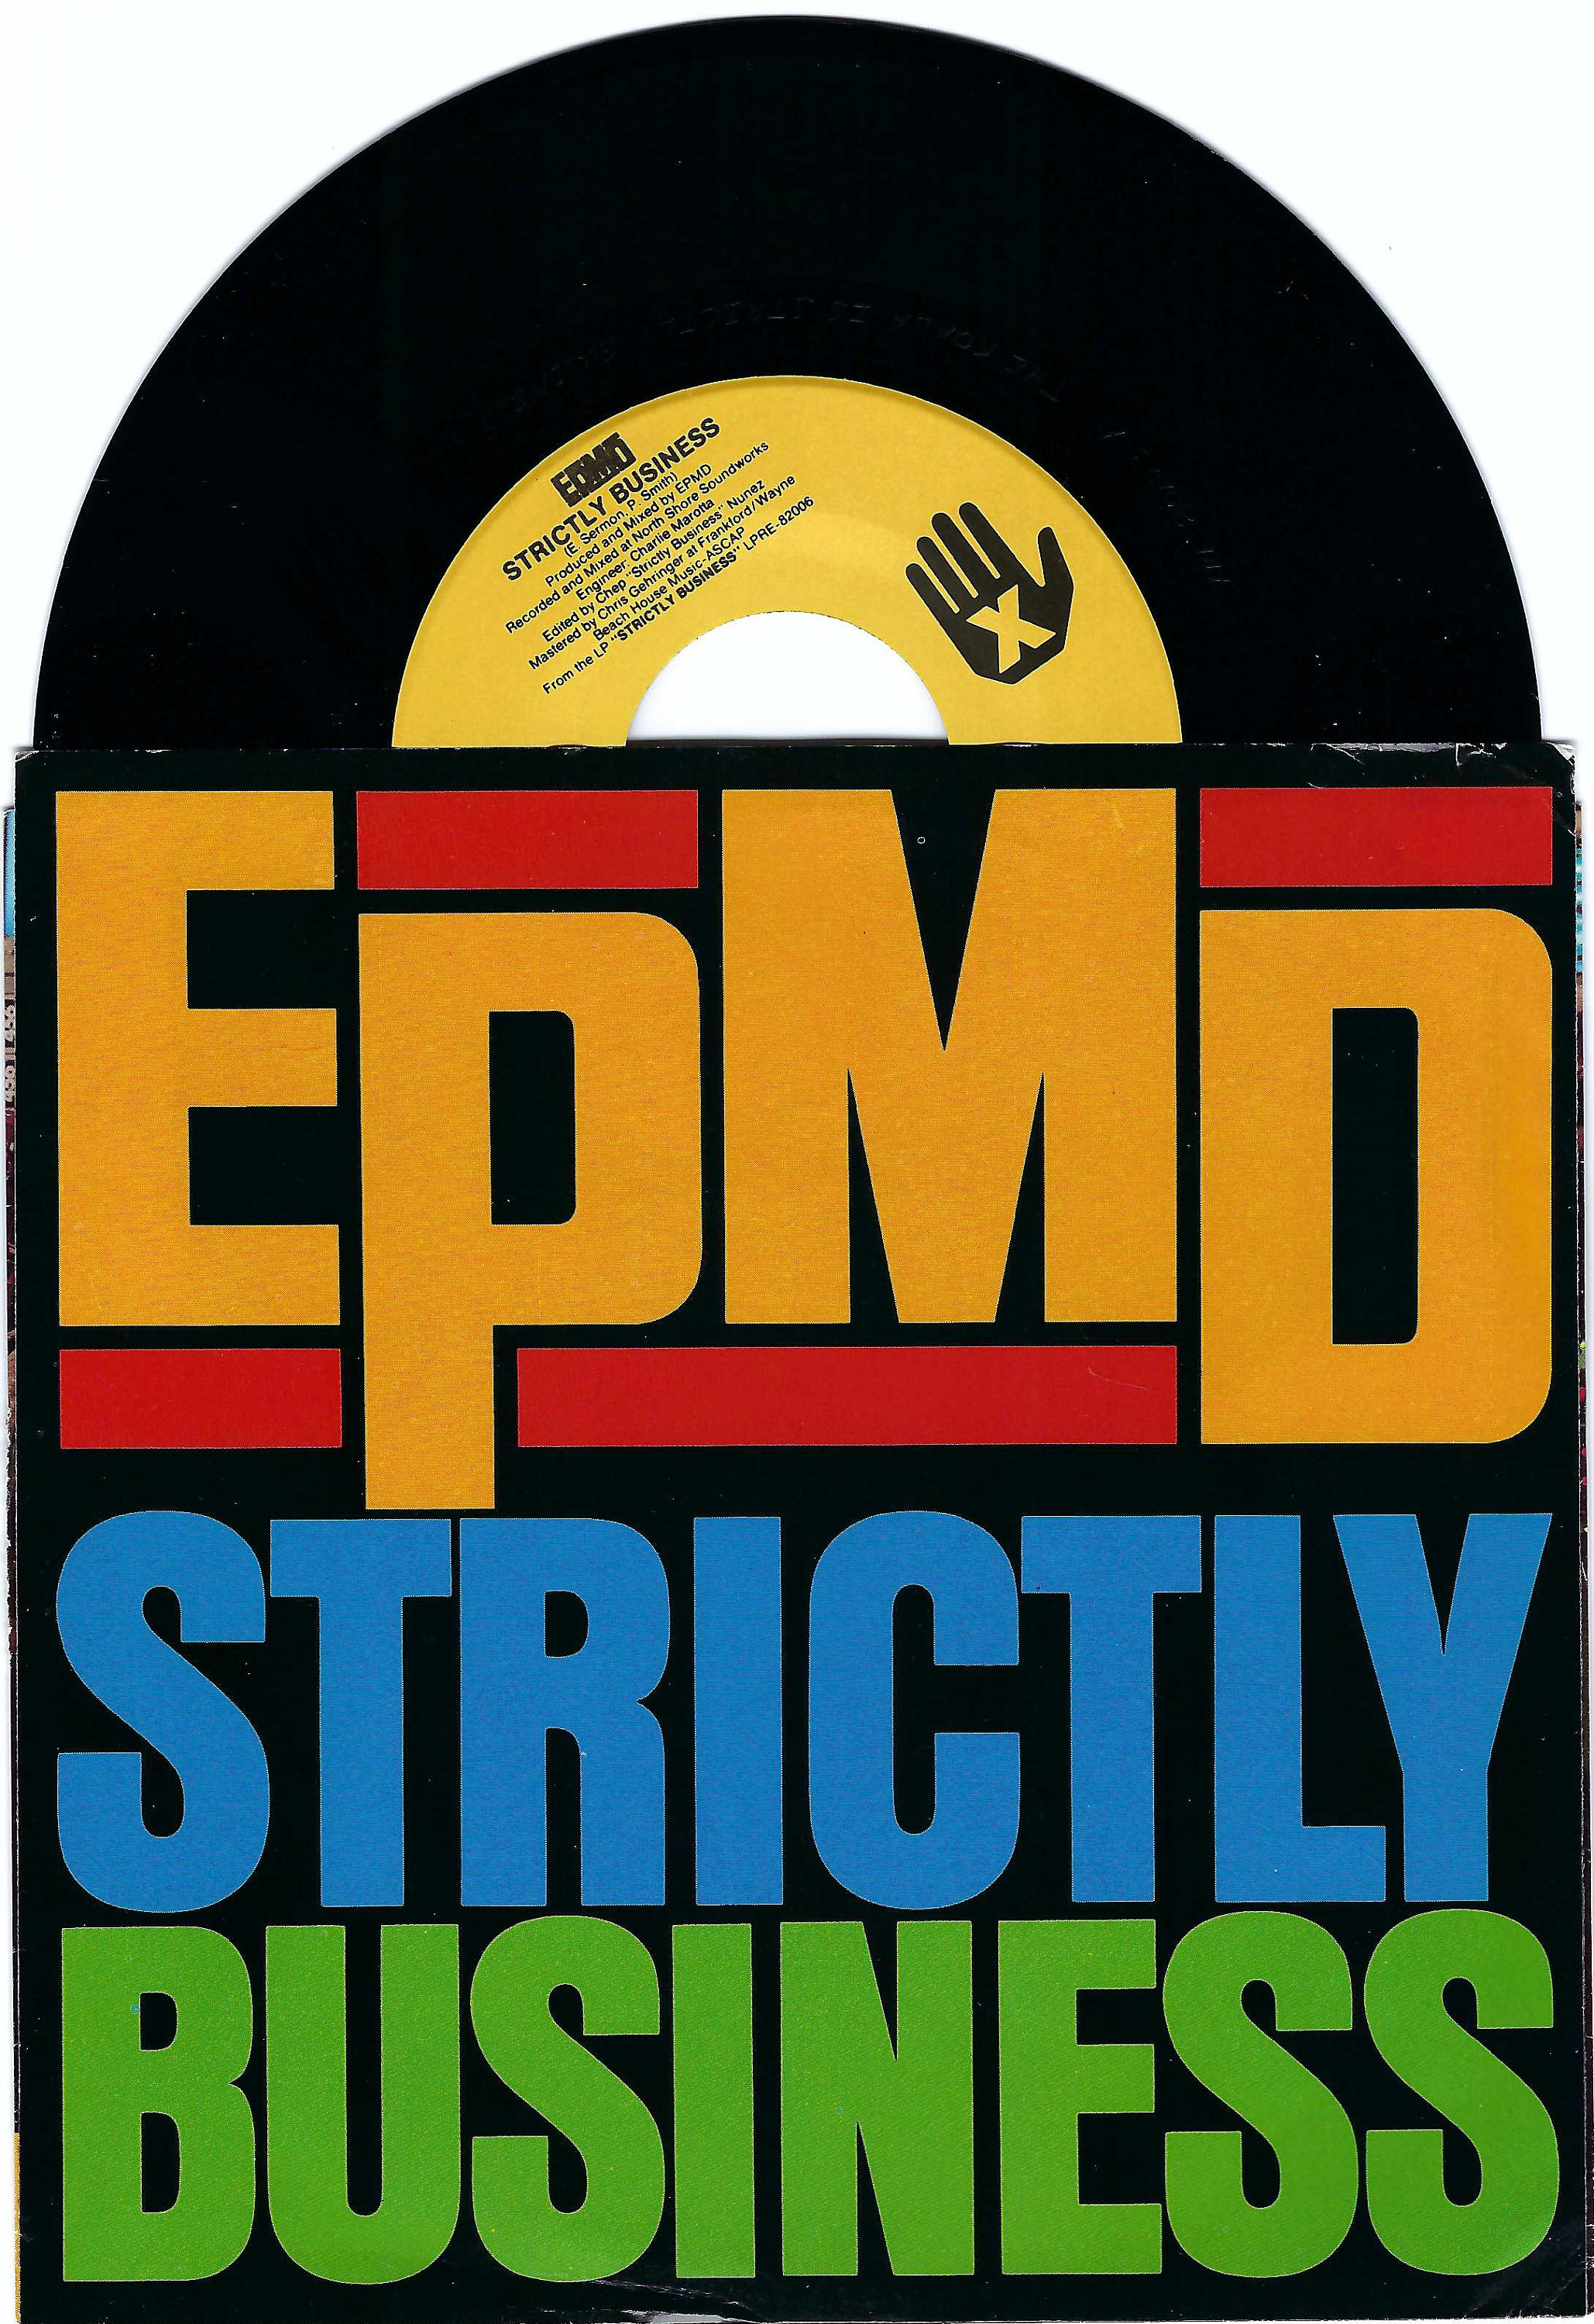 EPMD　NM　Etsy　strictly　Press　Business　original